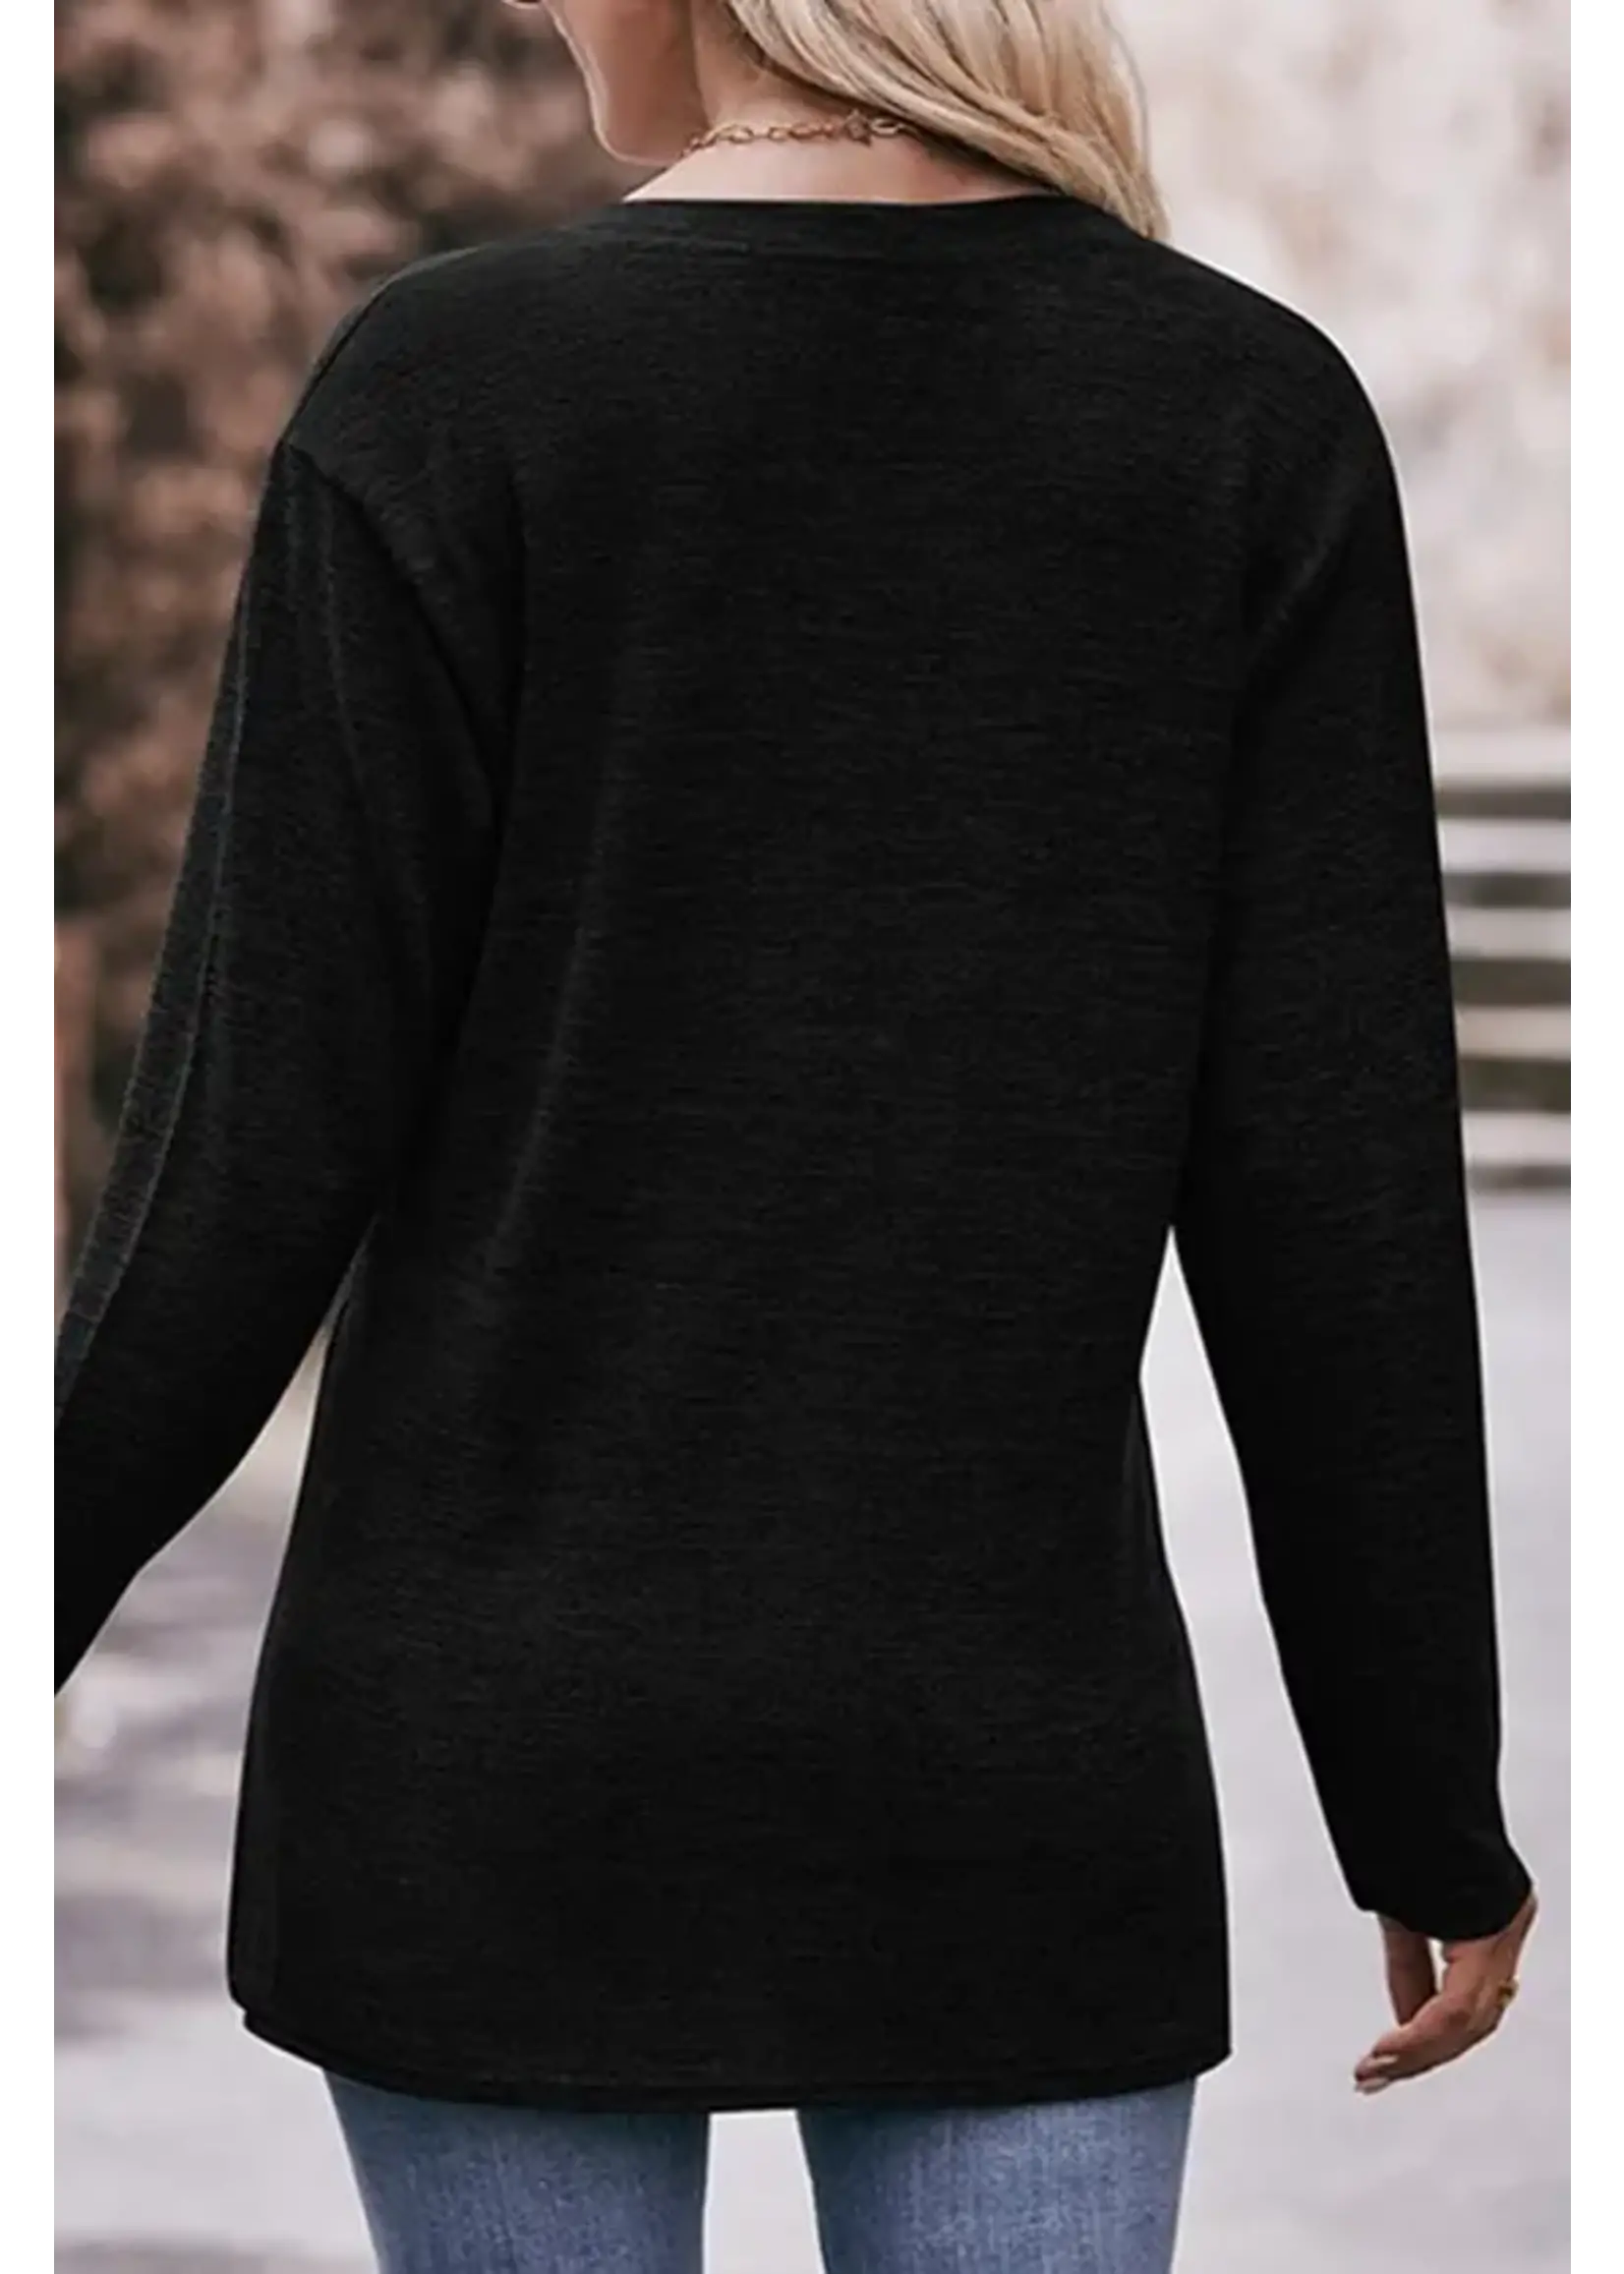 Plain V Neck Buttoned Long Sleeves Top black s